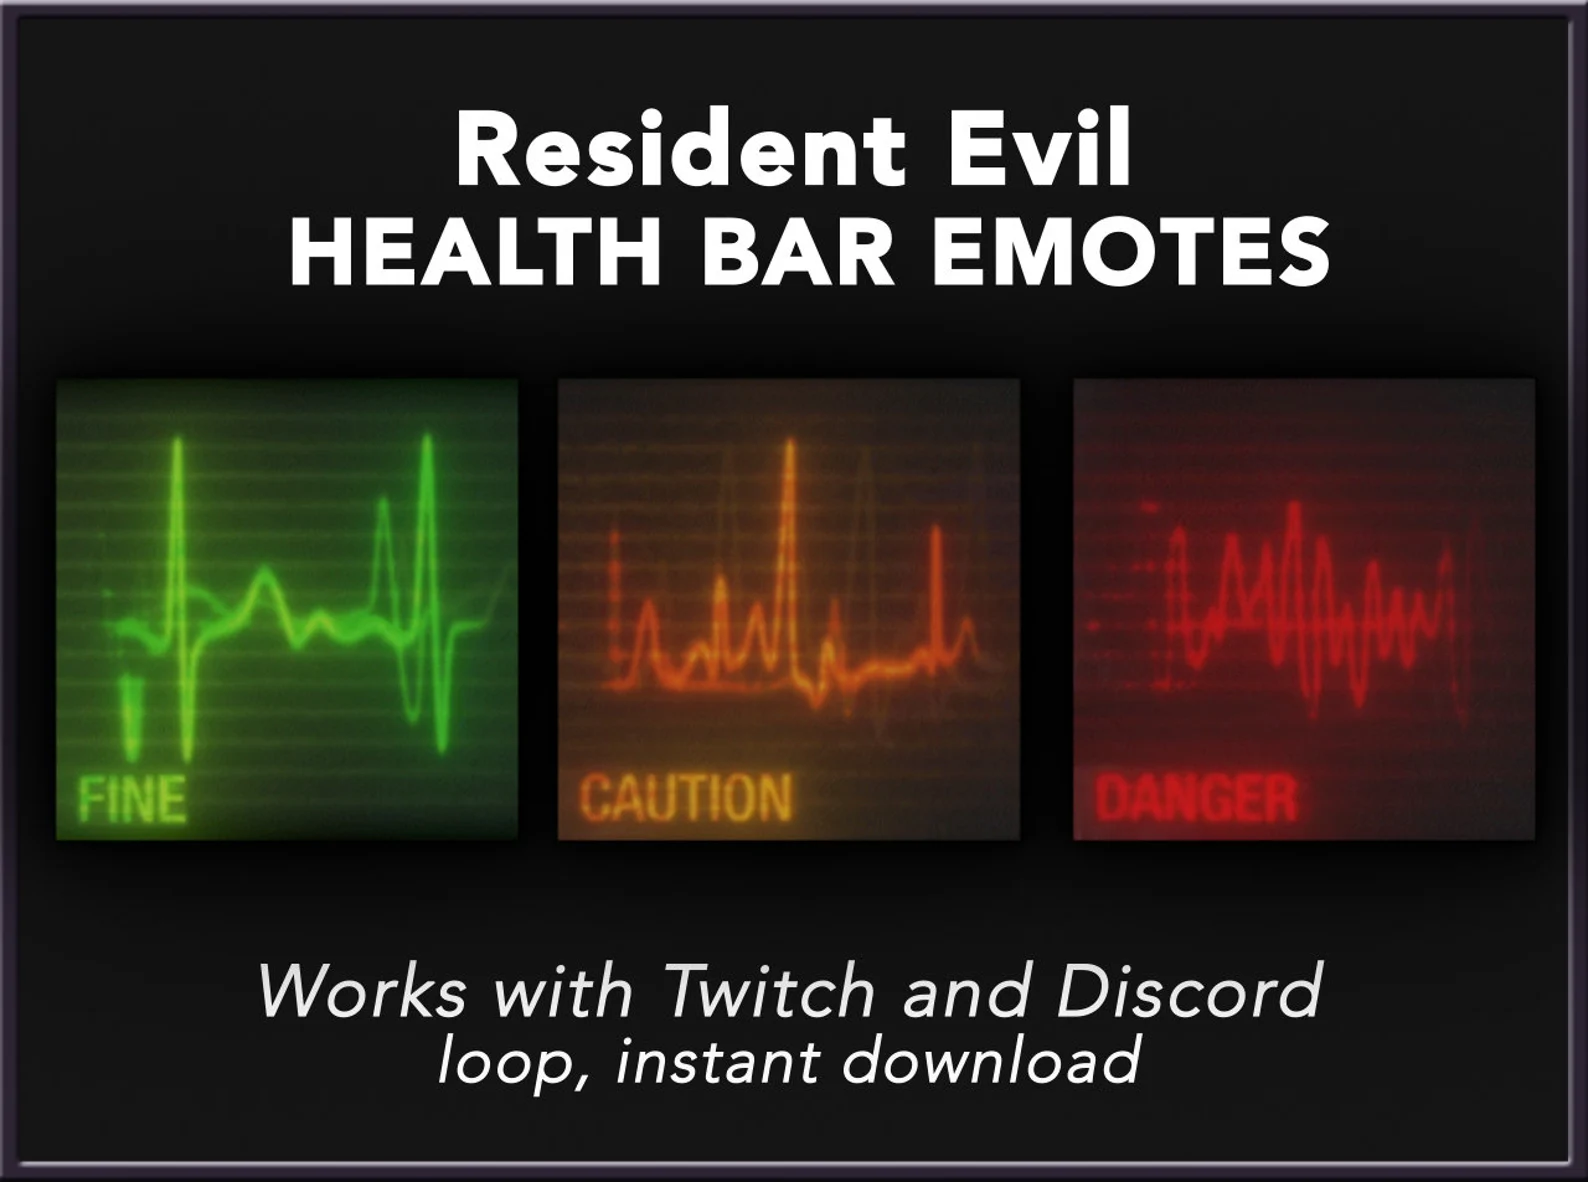 Resident Evil emotes for Twitch